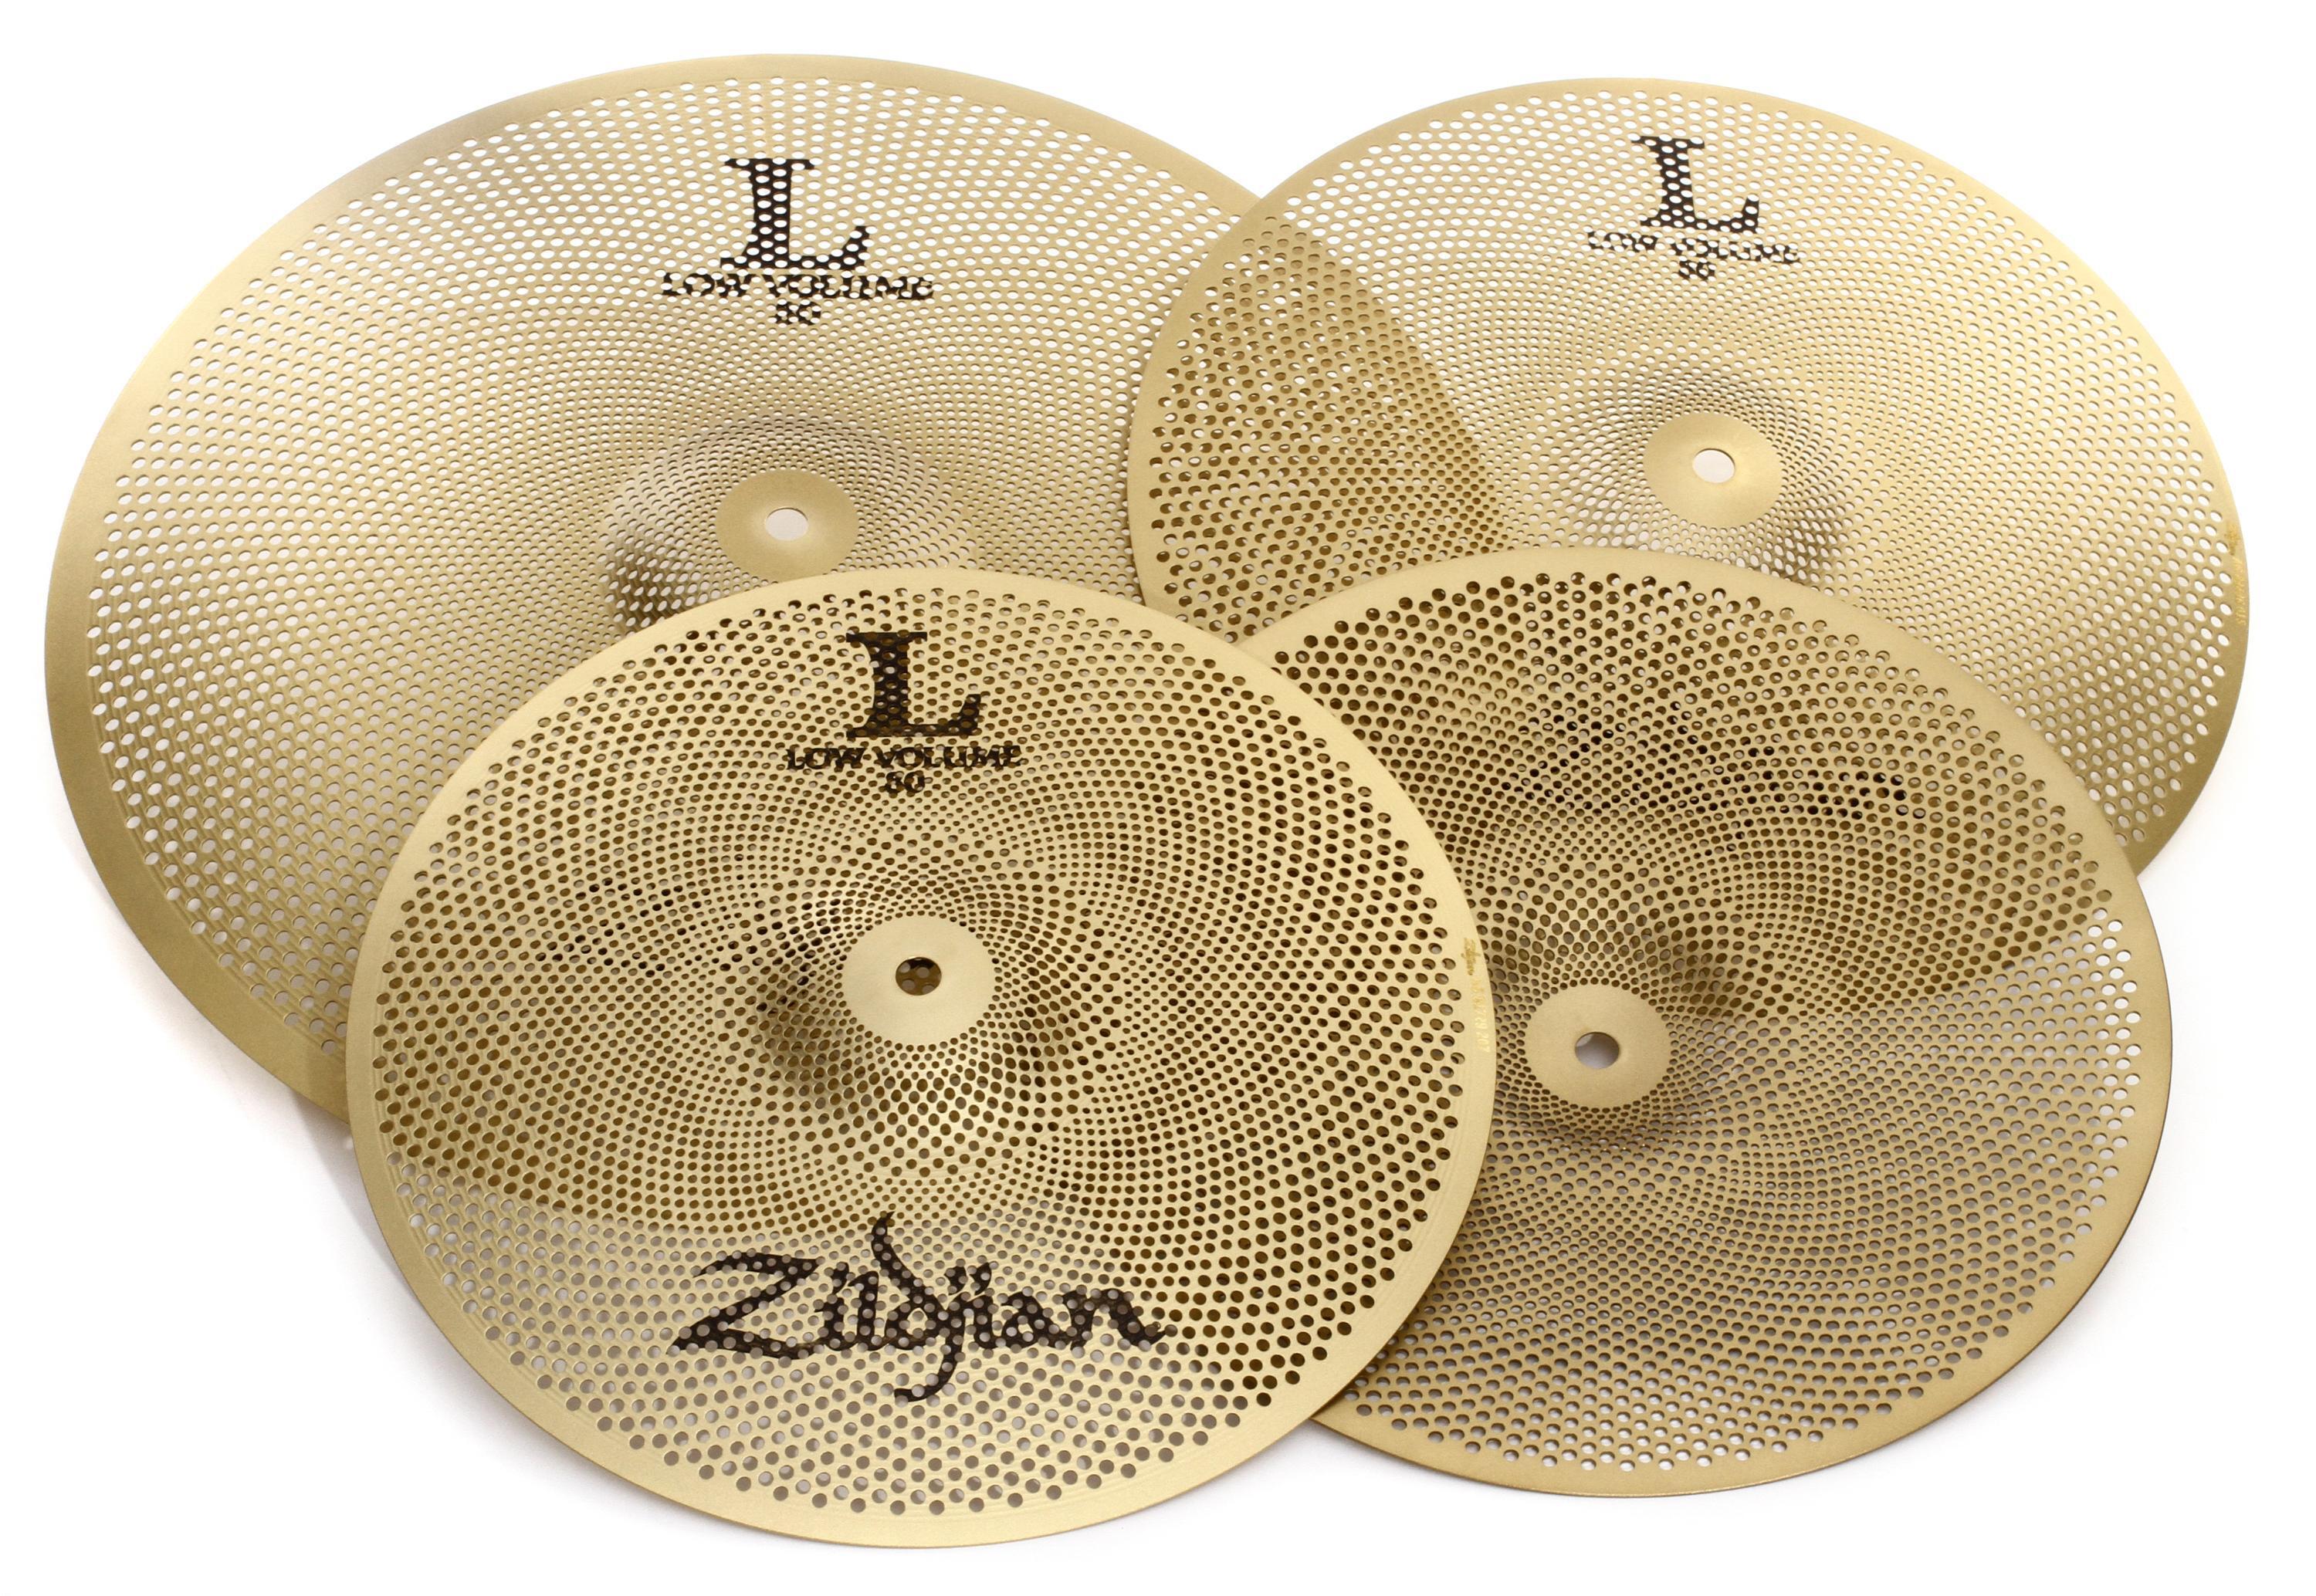 Zildjian L80 Low Volume Cymbal Set - 13/14/18 inch